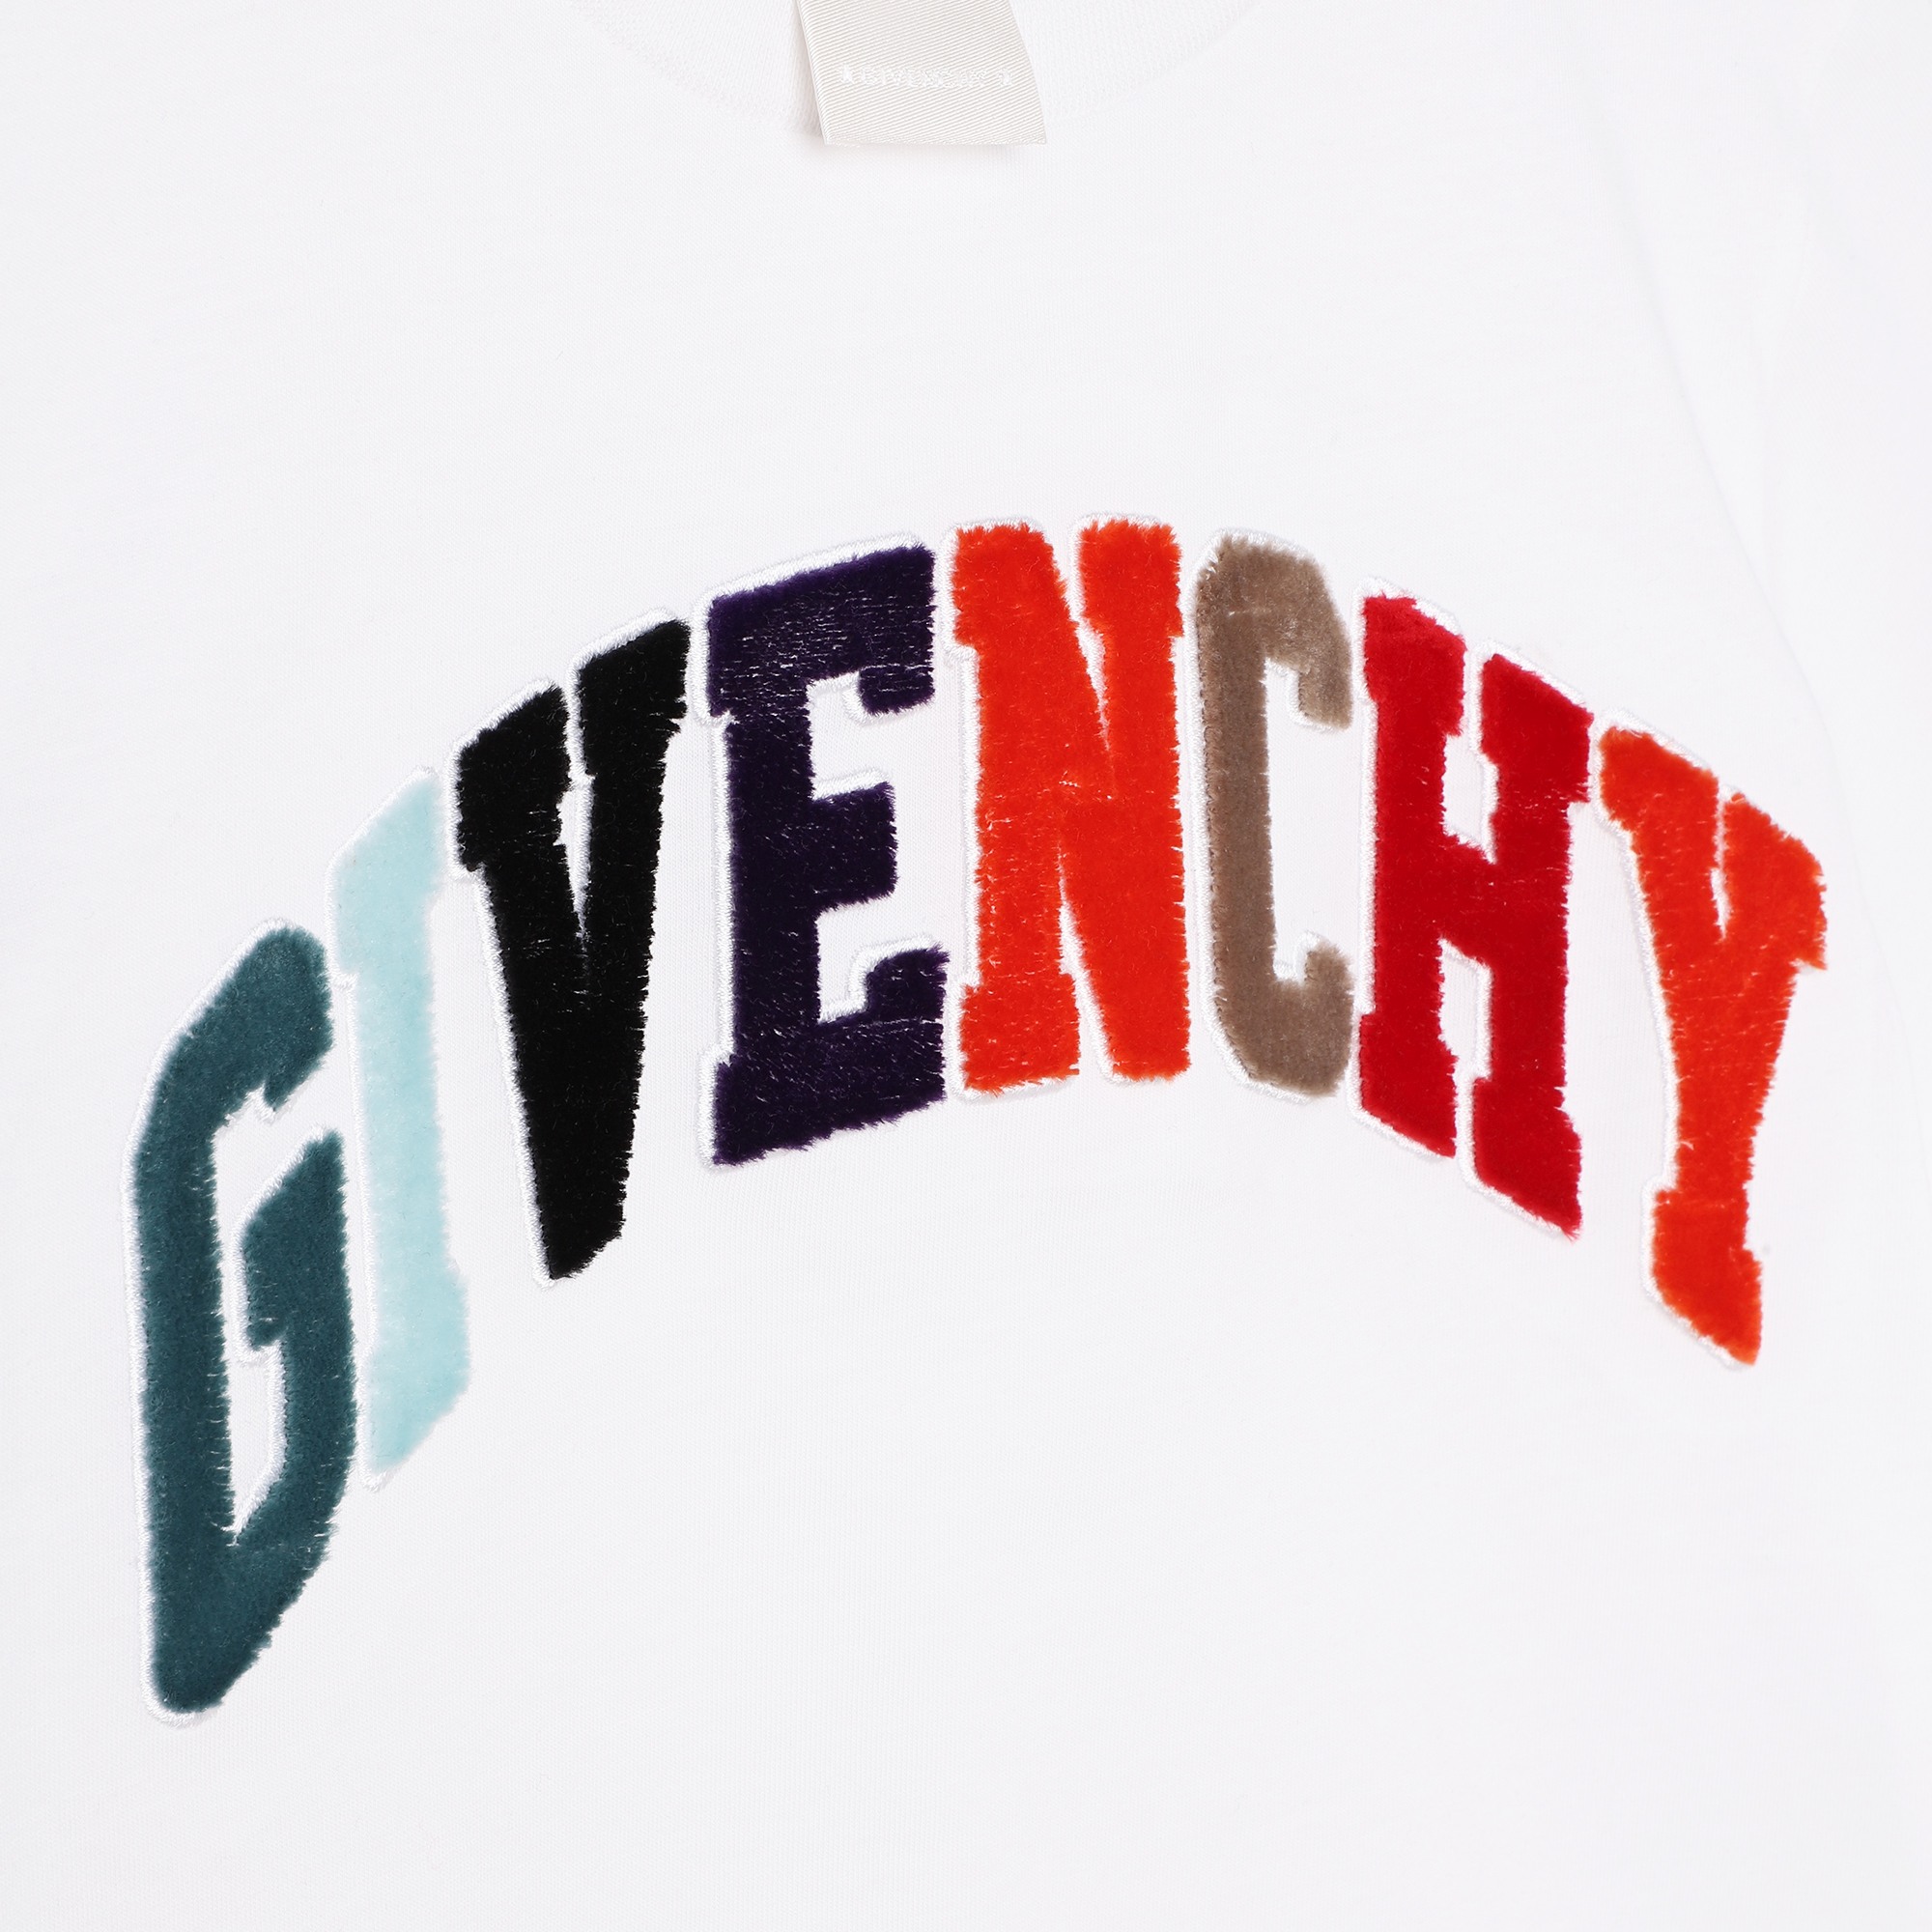 T-shirt cotone patch velluto GIVENCHY Per RAGAZZO